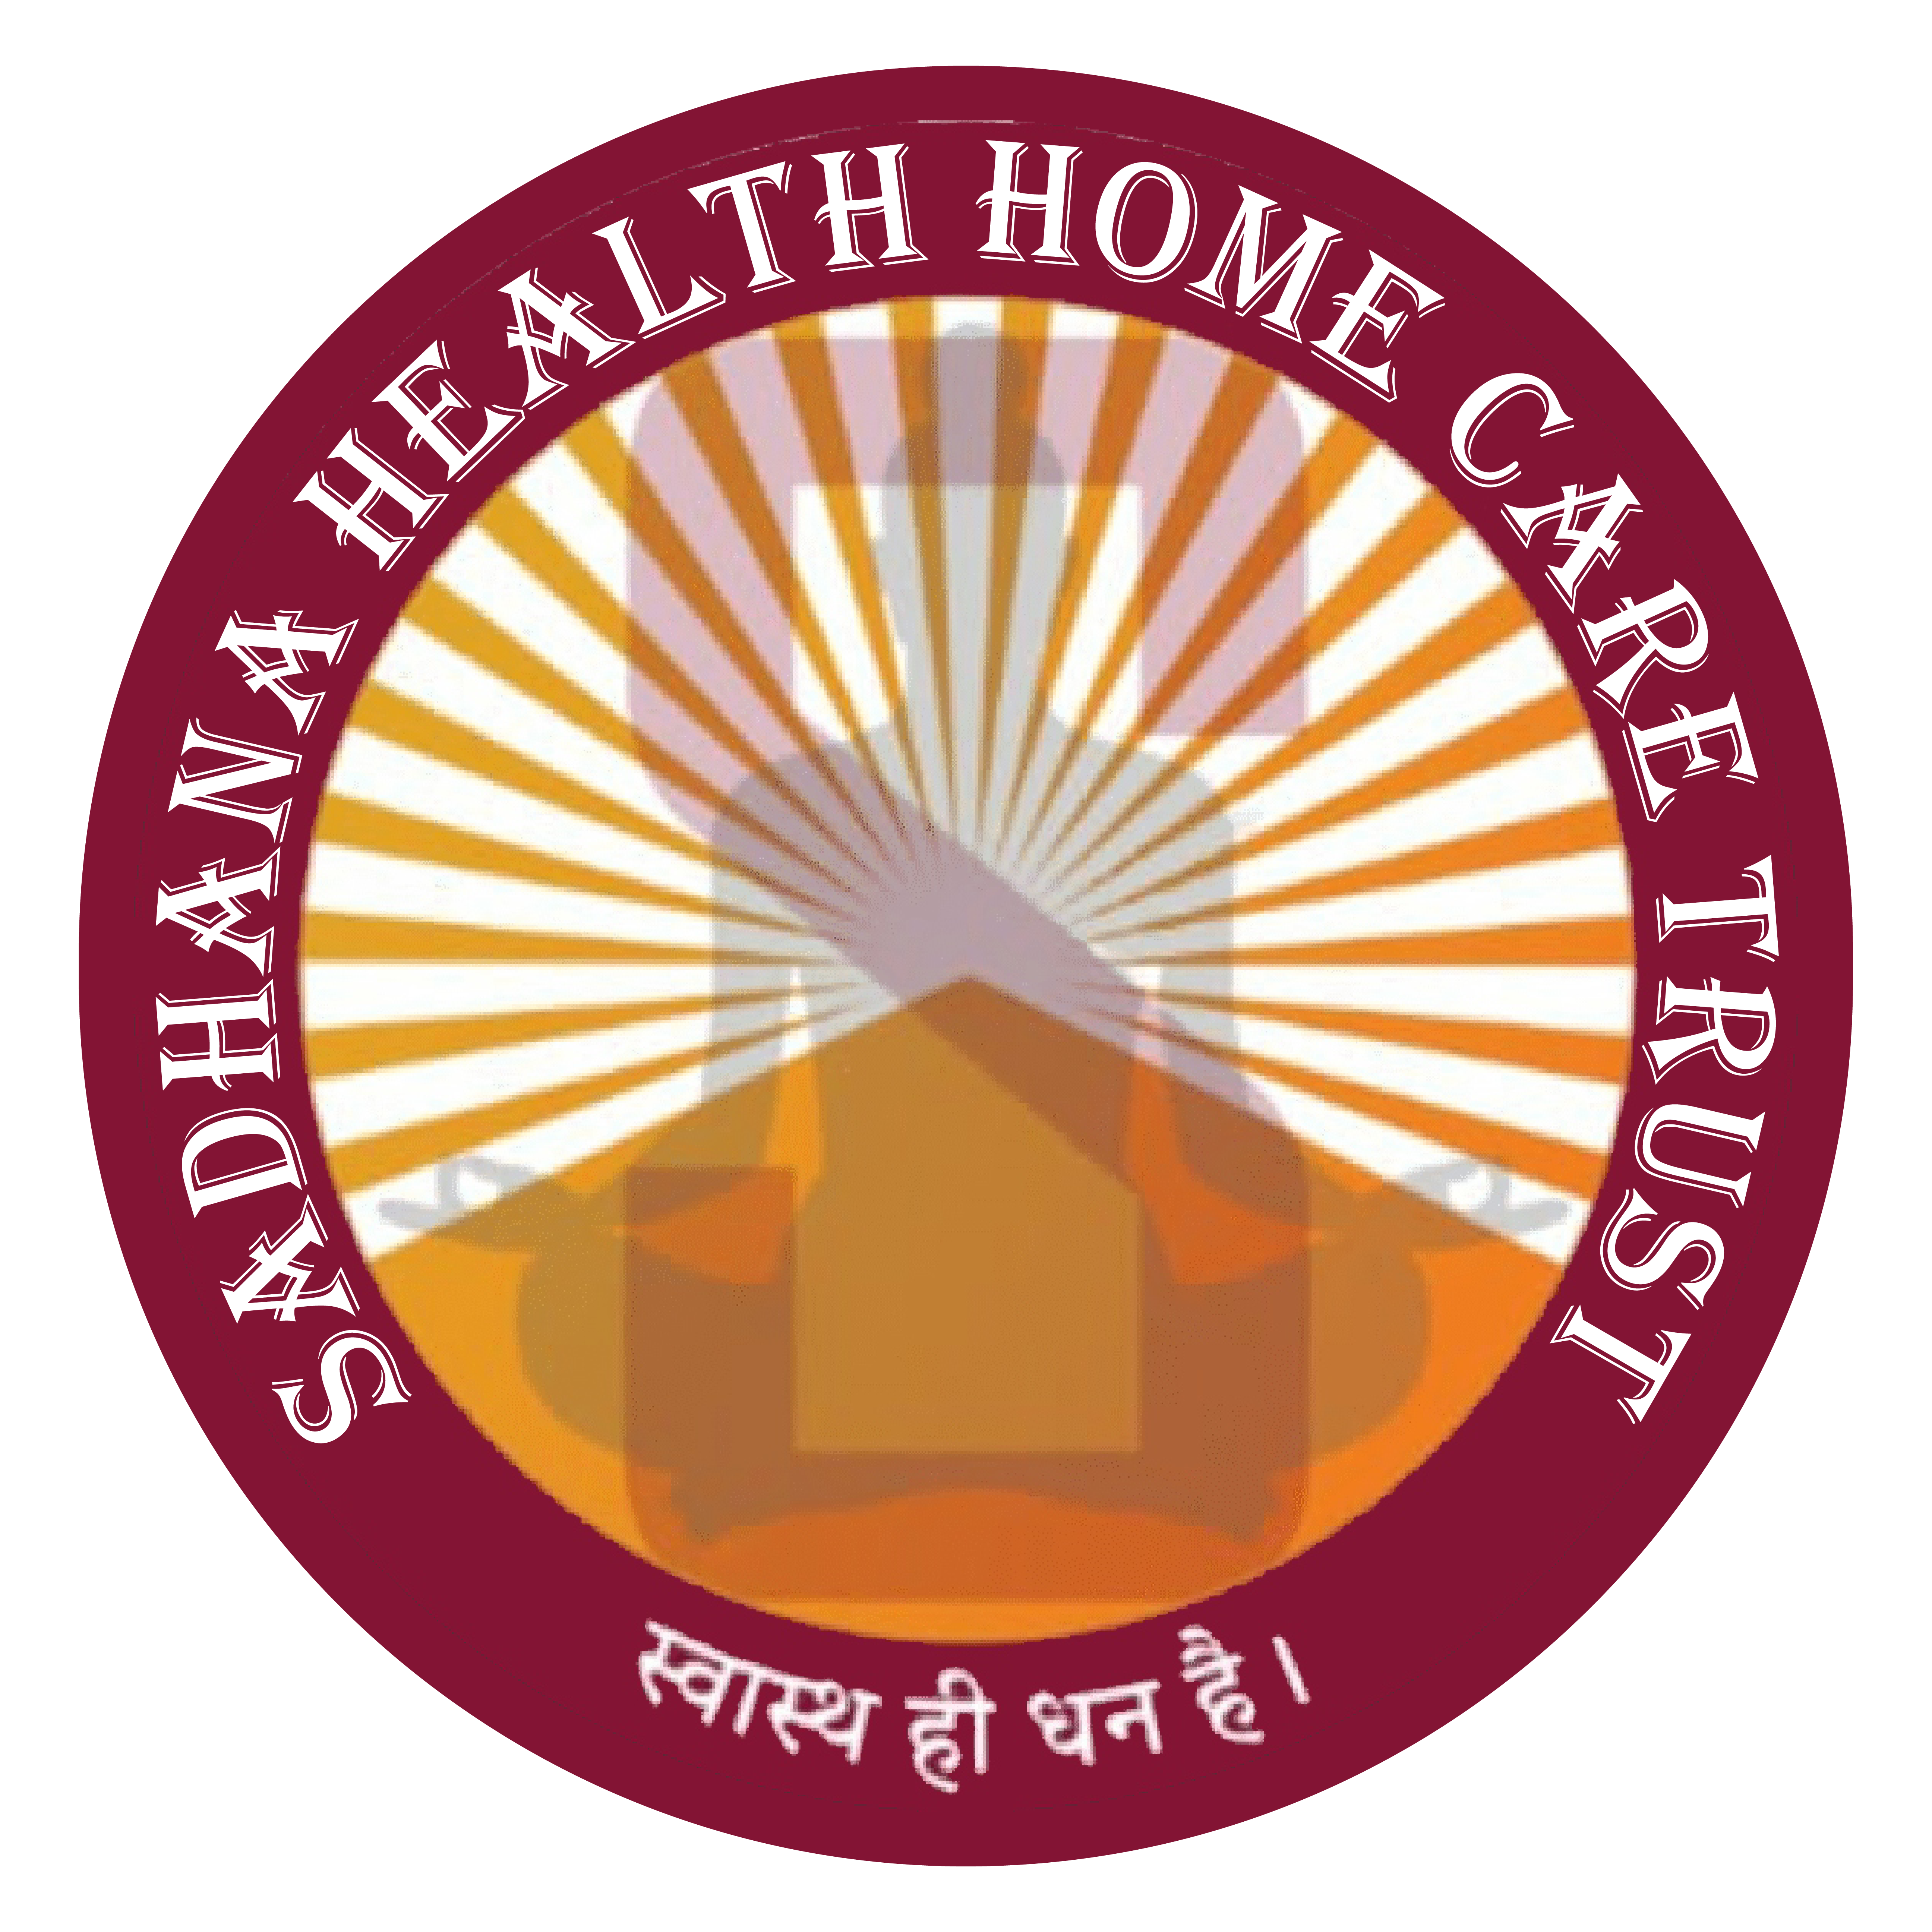 Sadhana Health Home Care Trust